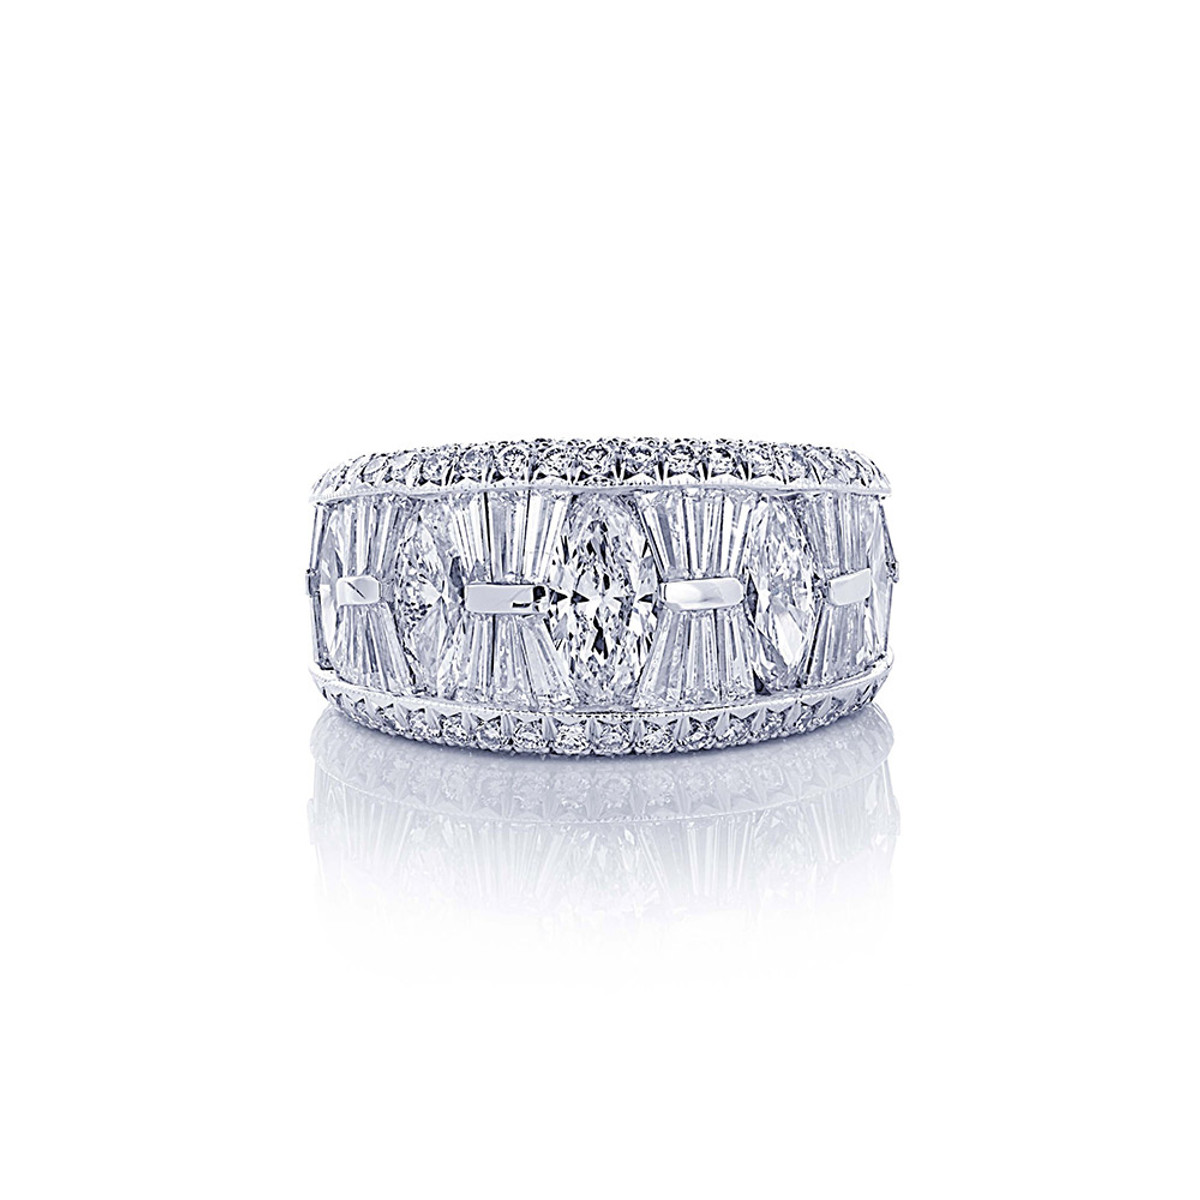 JB Star Collection Platinum Marquise Diamond Ring-DANVB7493 Product Image